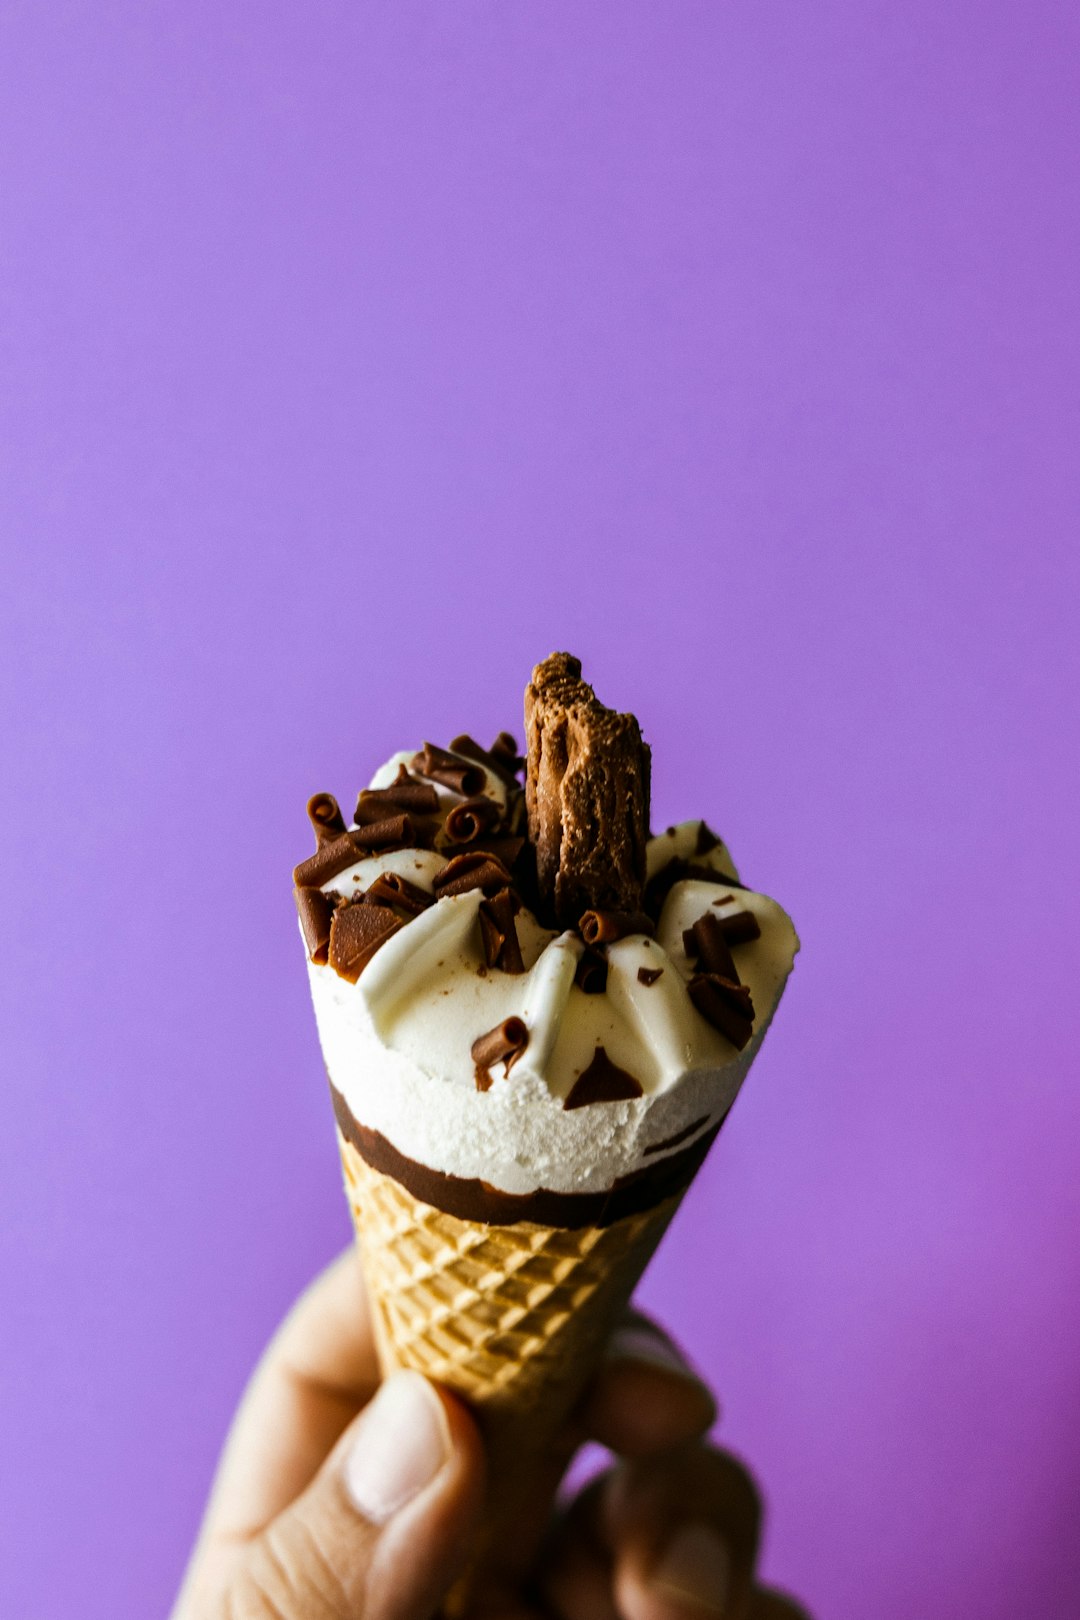 ice cream cone with chocolate and white ice cream